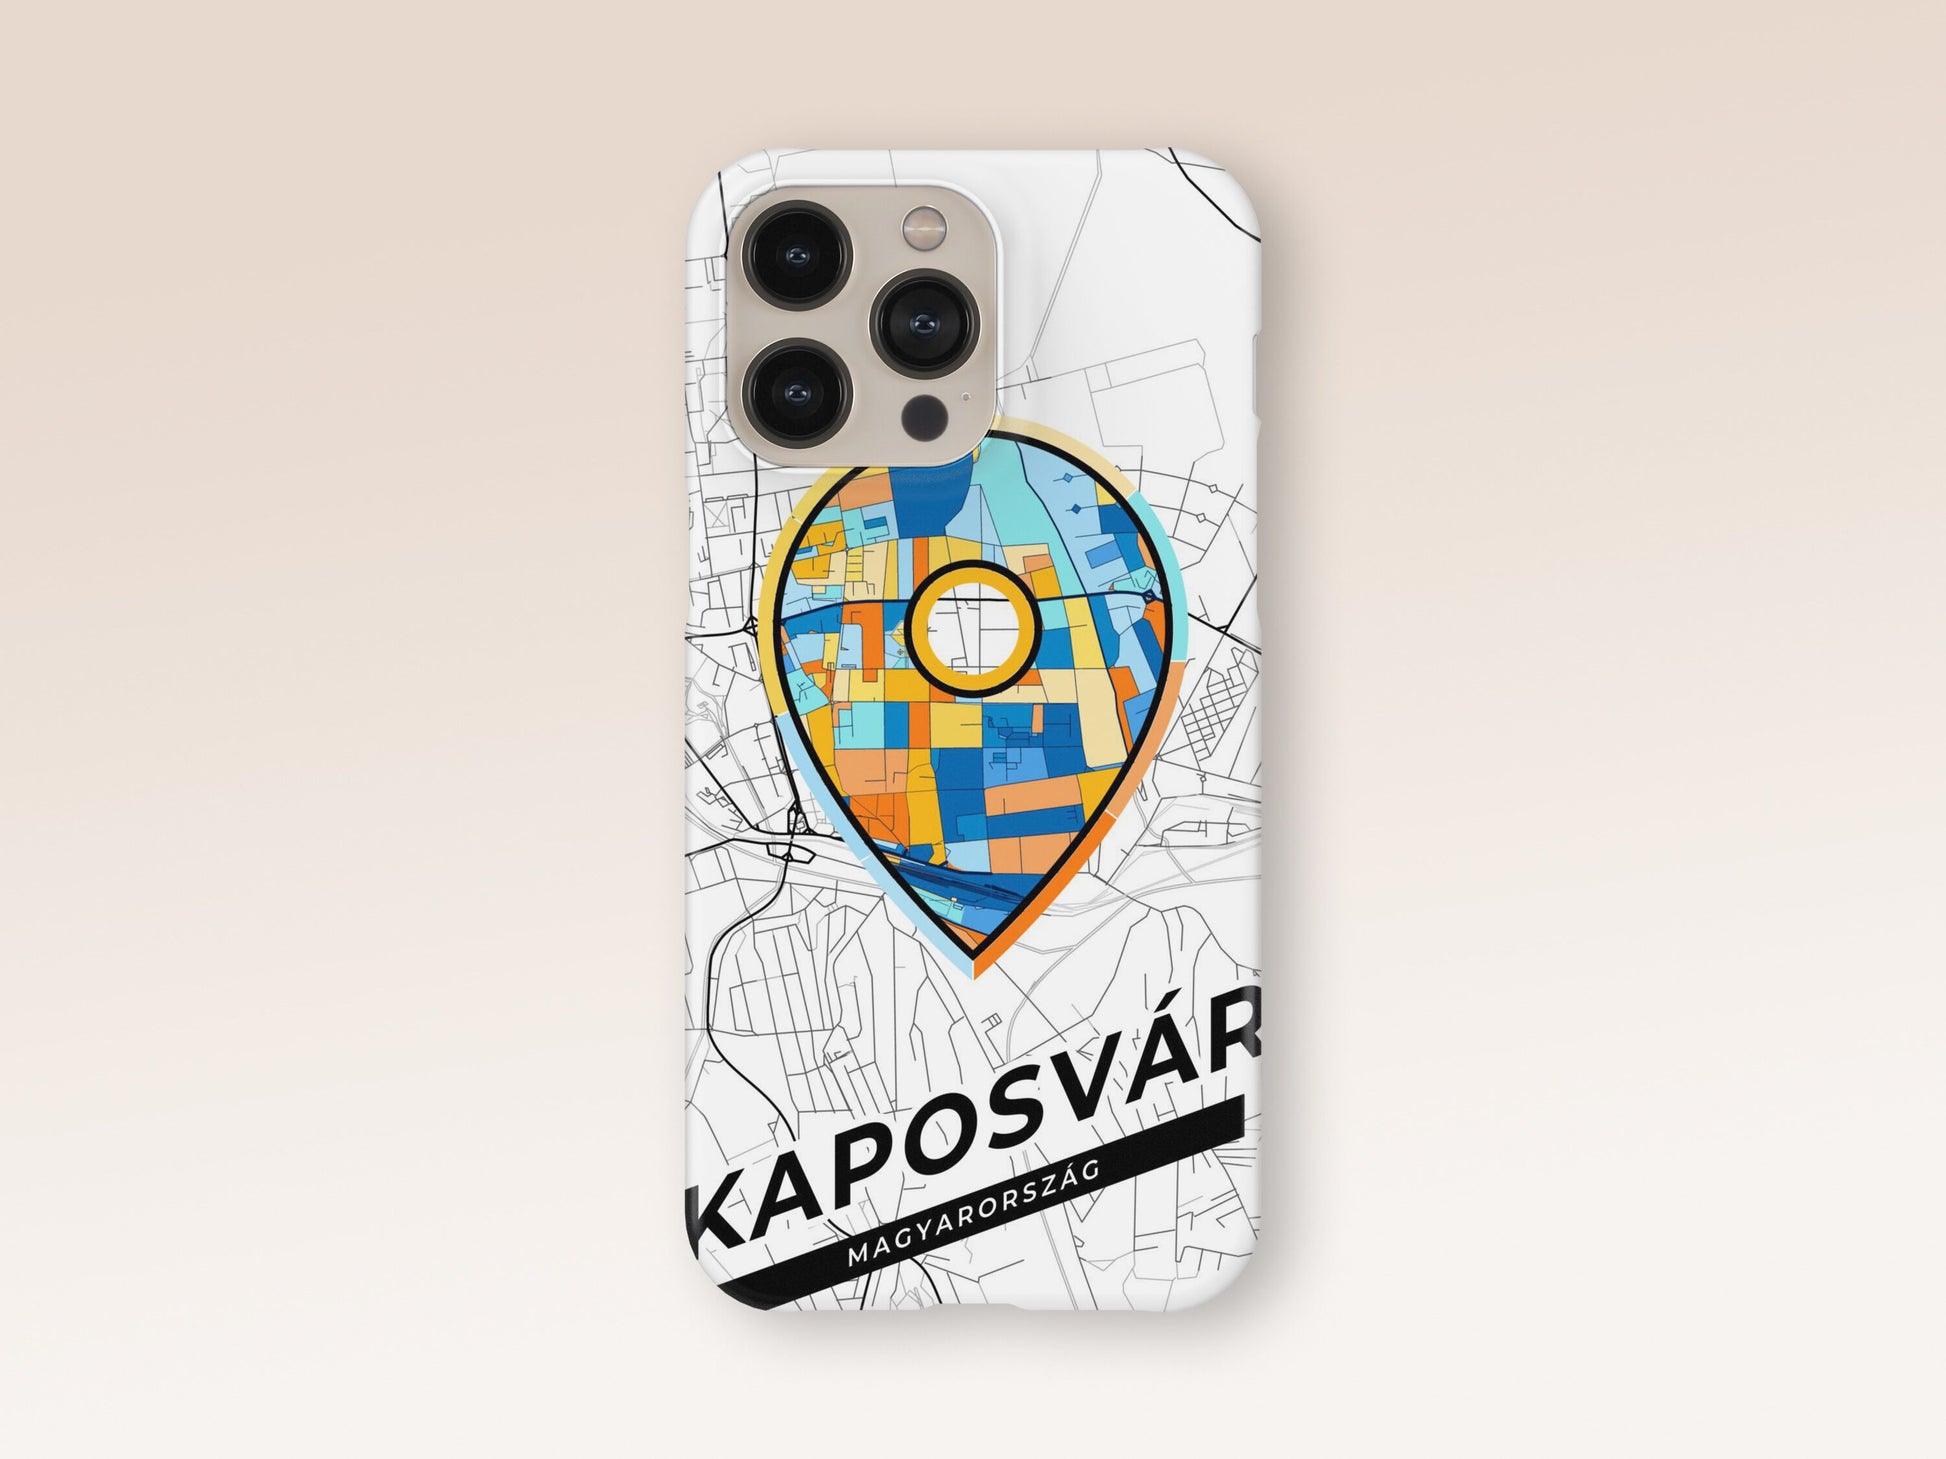 Kaposvár Hungary slim phone case with colorful icon. Birthday, wedding or housewarming gift. Couple match cases. 1